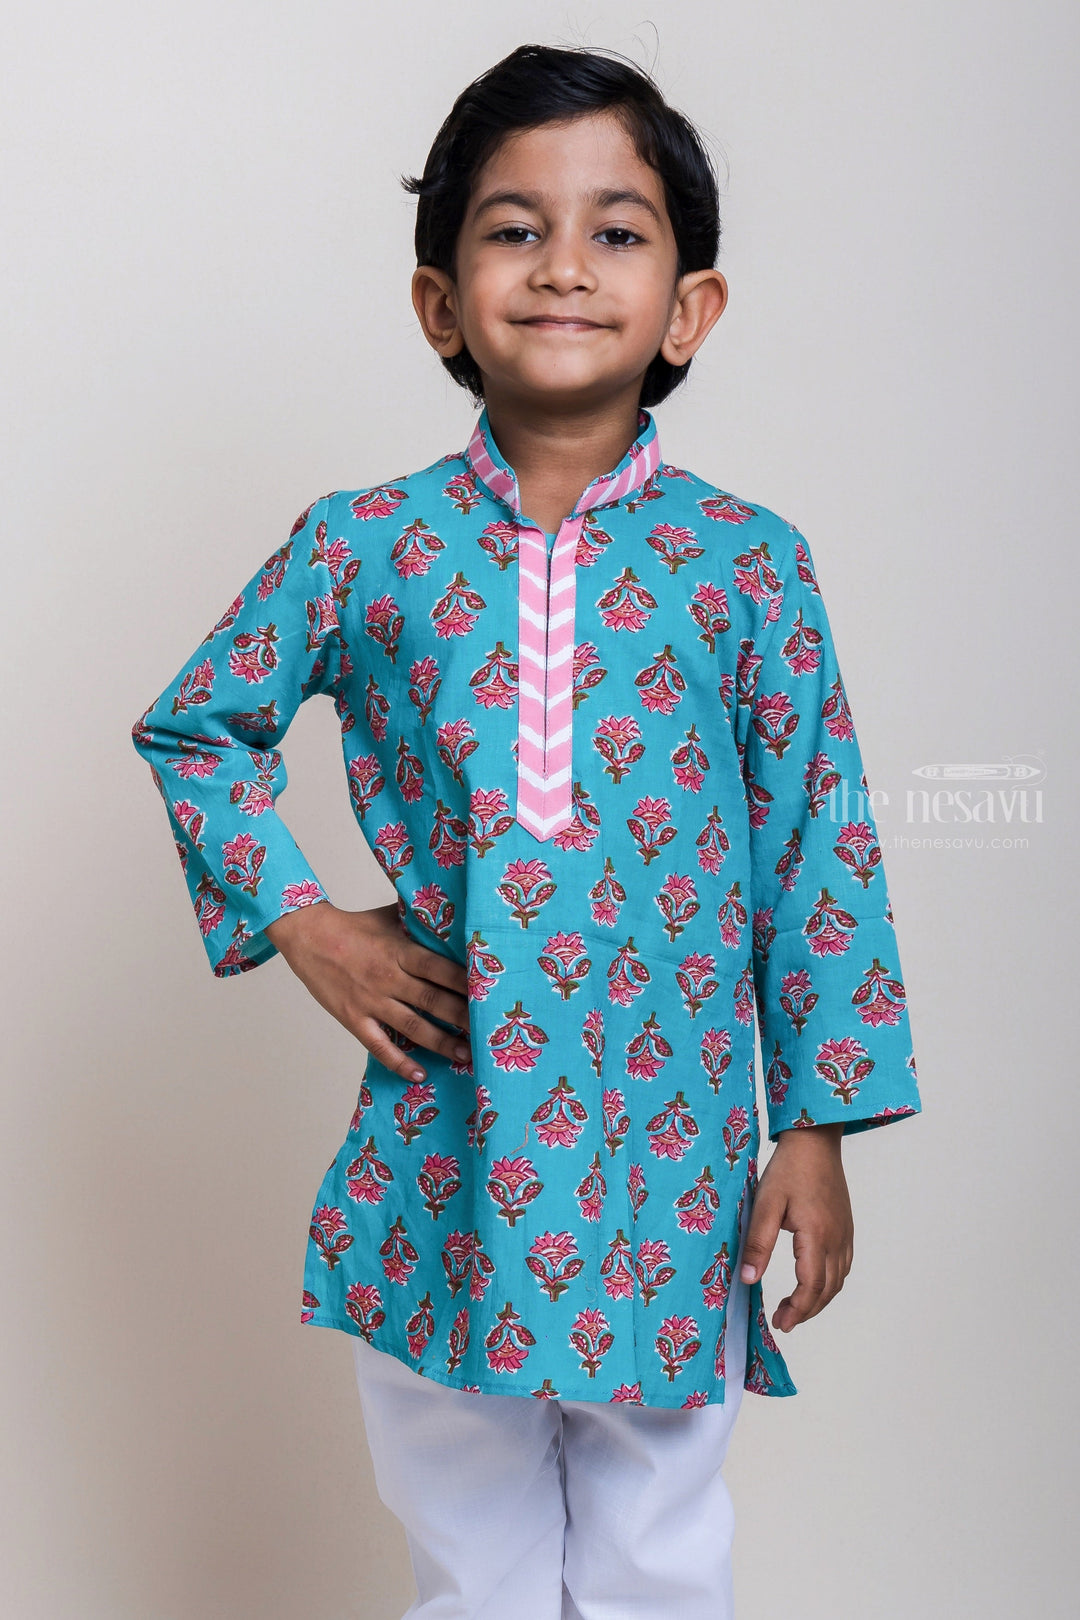 The Nesavu Boys Kurtha Set Designer Neck Floral Printed Blue Cotton Kurta And Pyjama For Little Boys Nesavu Daily Wear Kurta Pyjama For Boys| Fresh Collection| The Nesavu